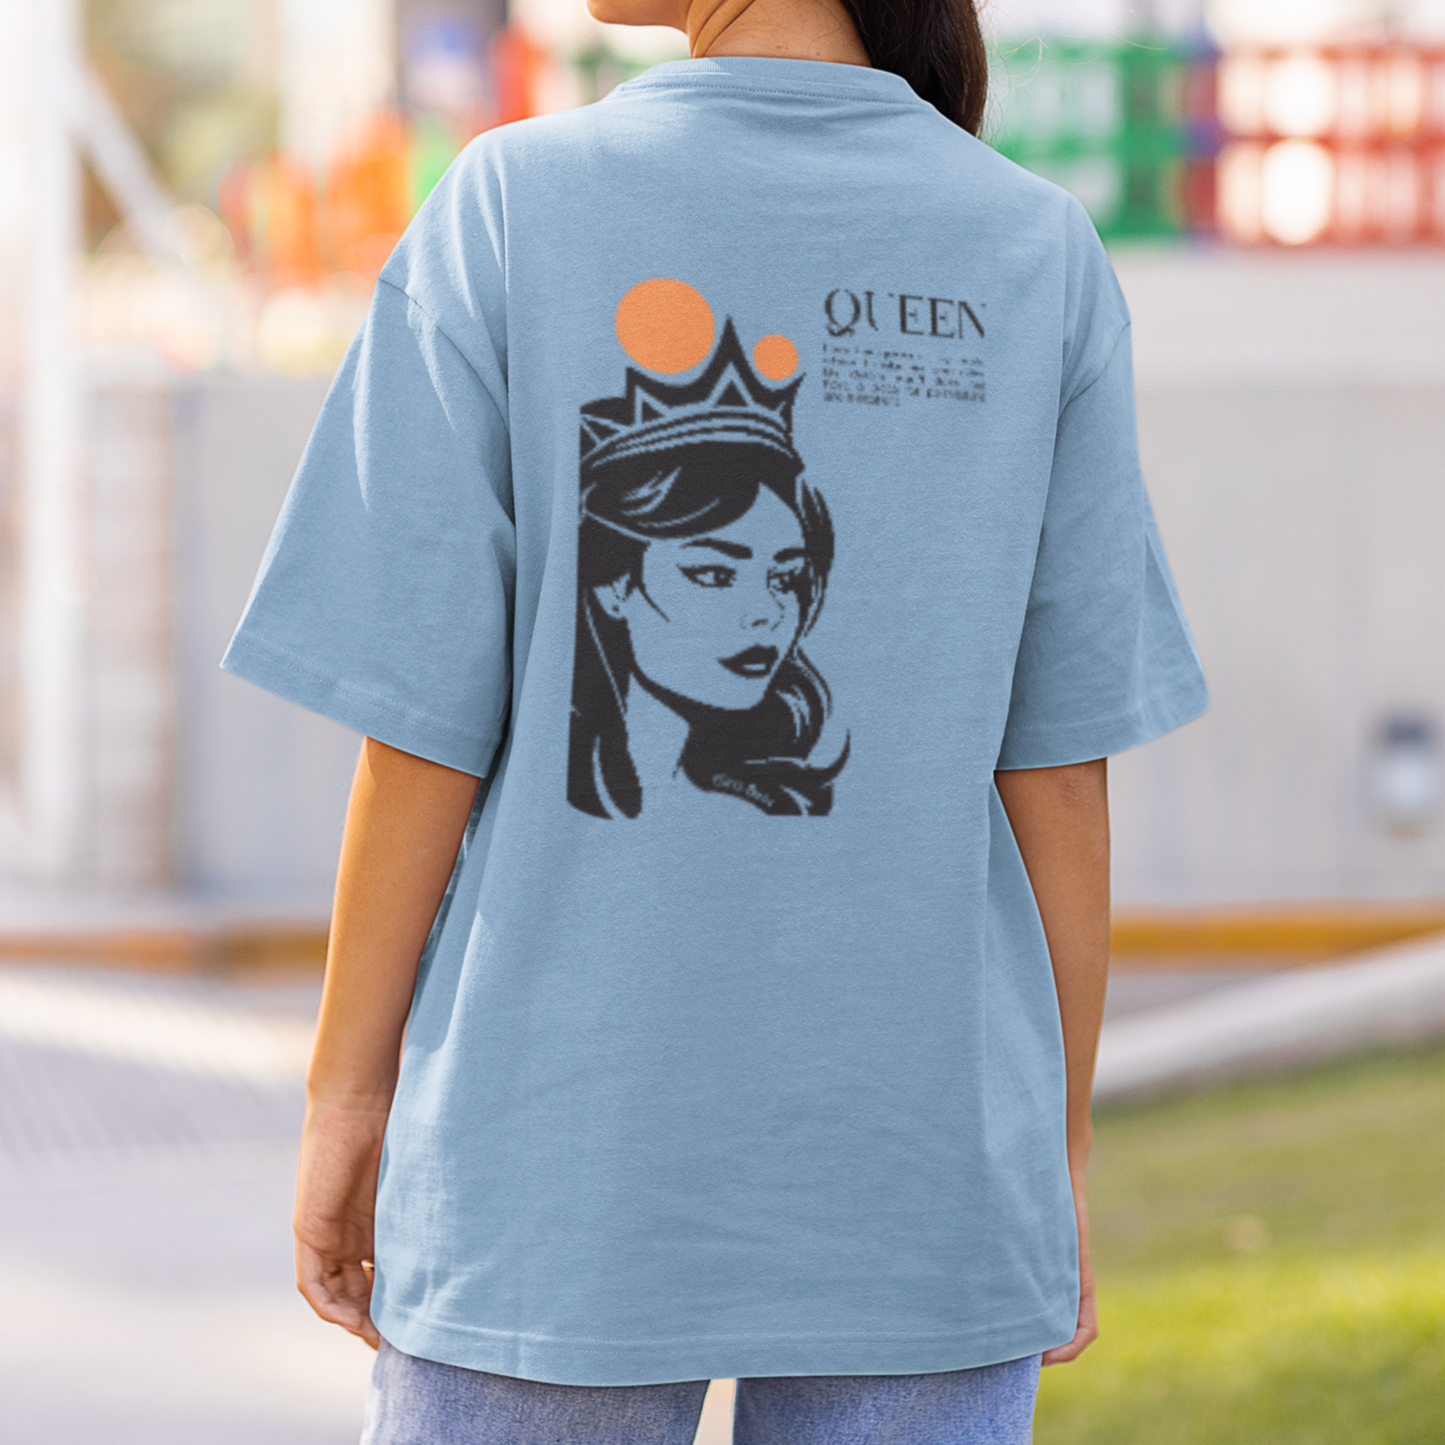 Queen Back Printed Tee